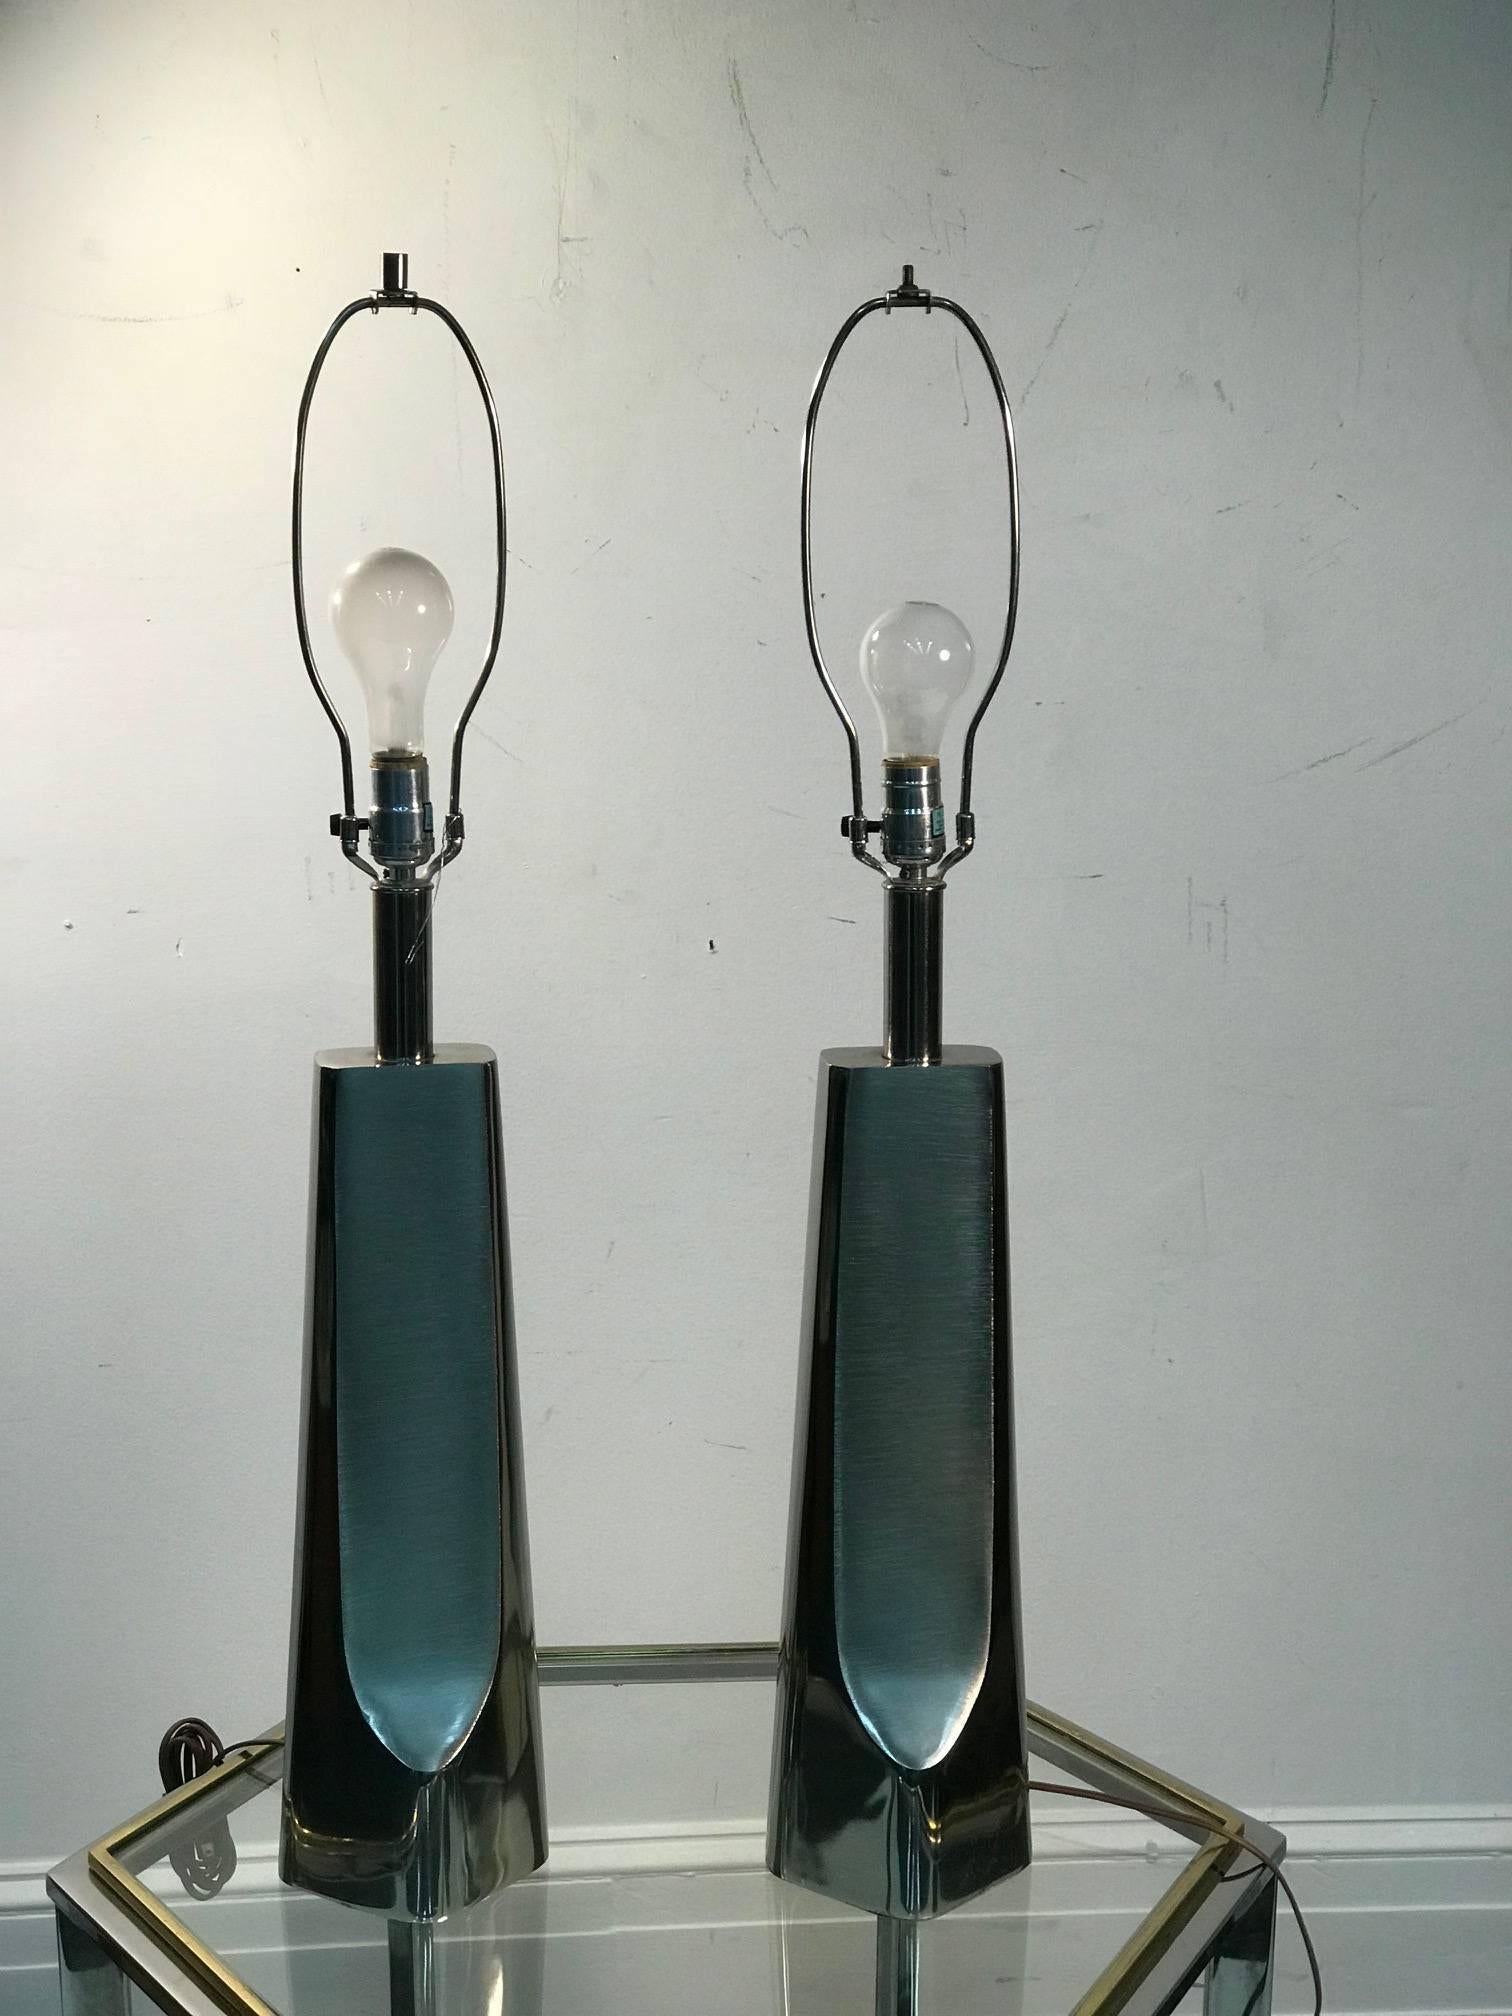 Modernist sculptural lamps by Laurel original shades.